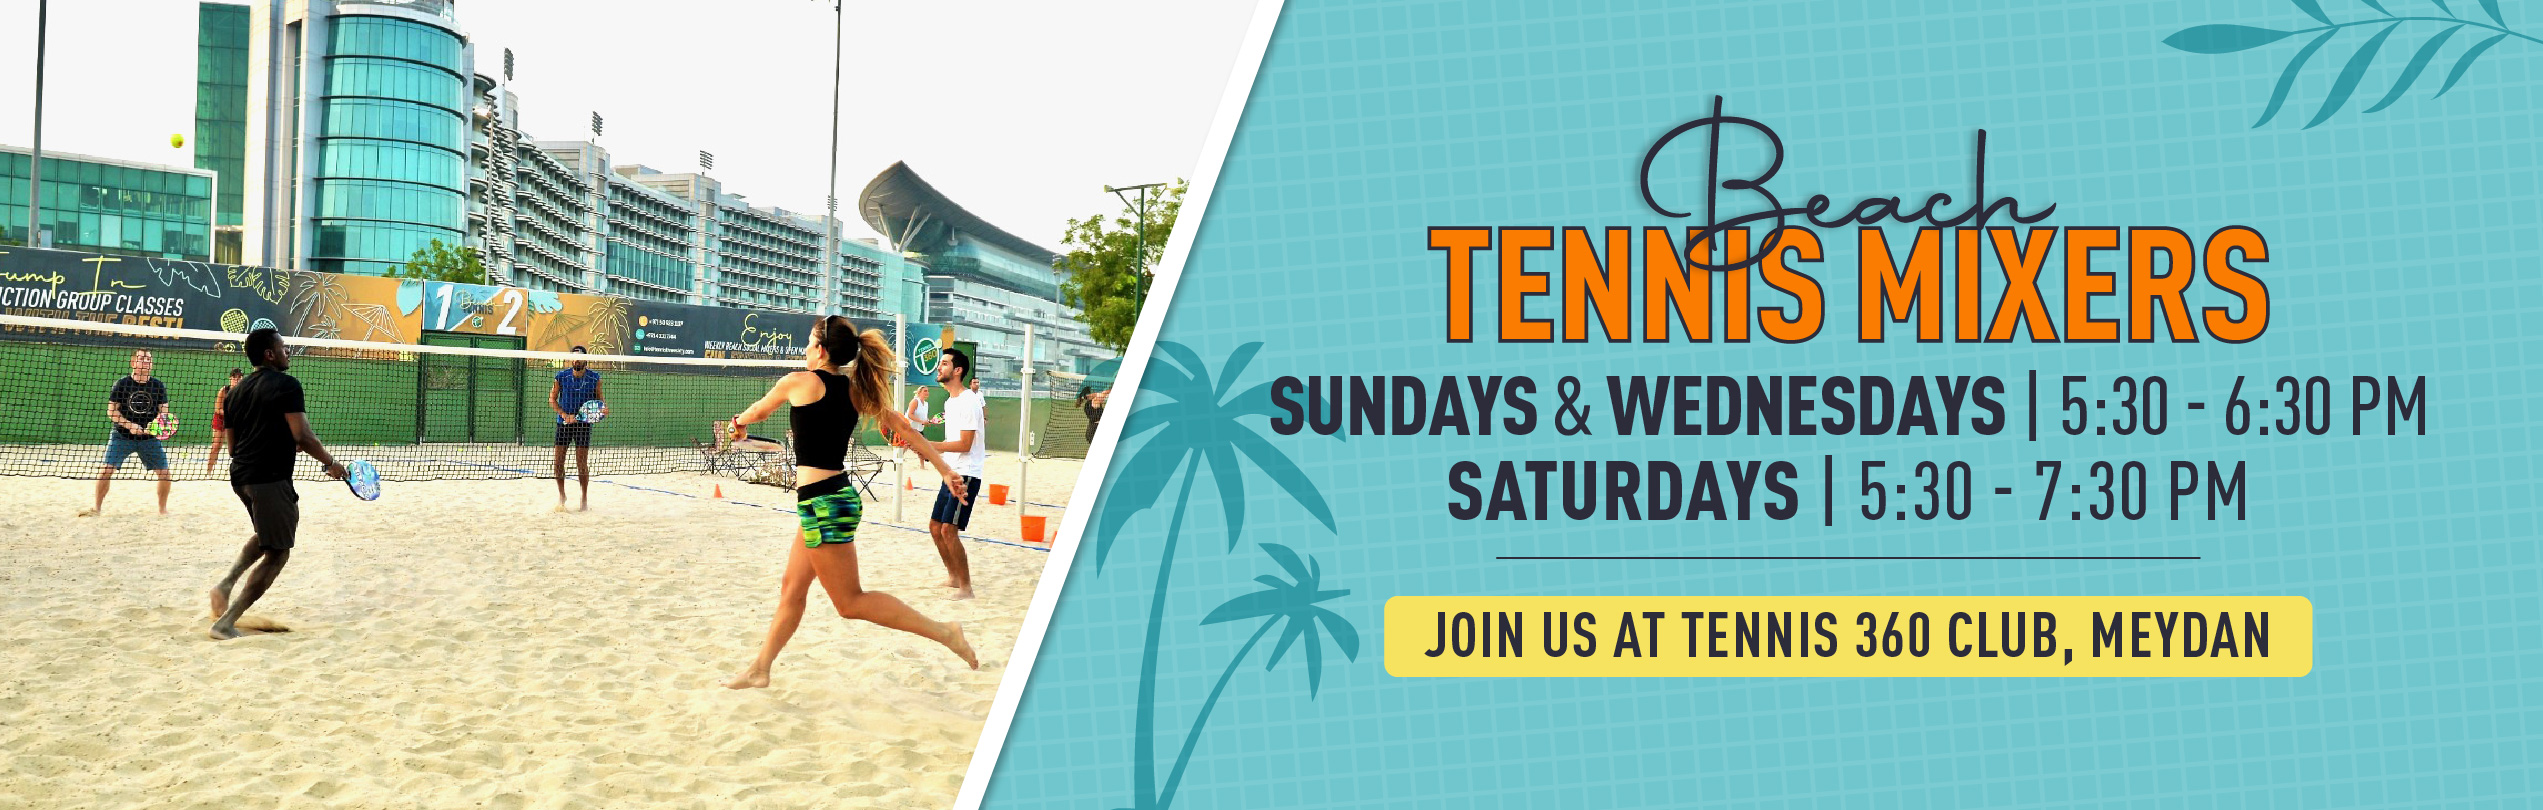 beach tennis mixers | TENNIS 360